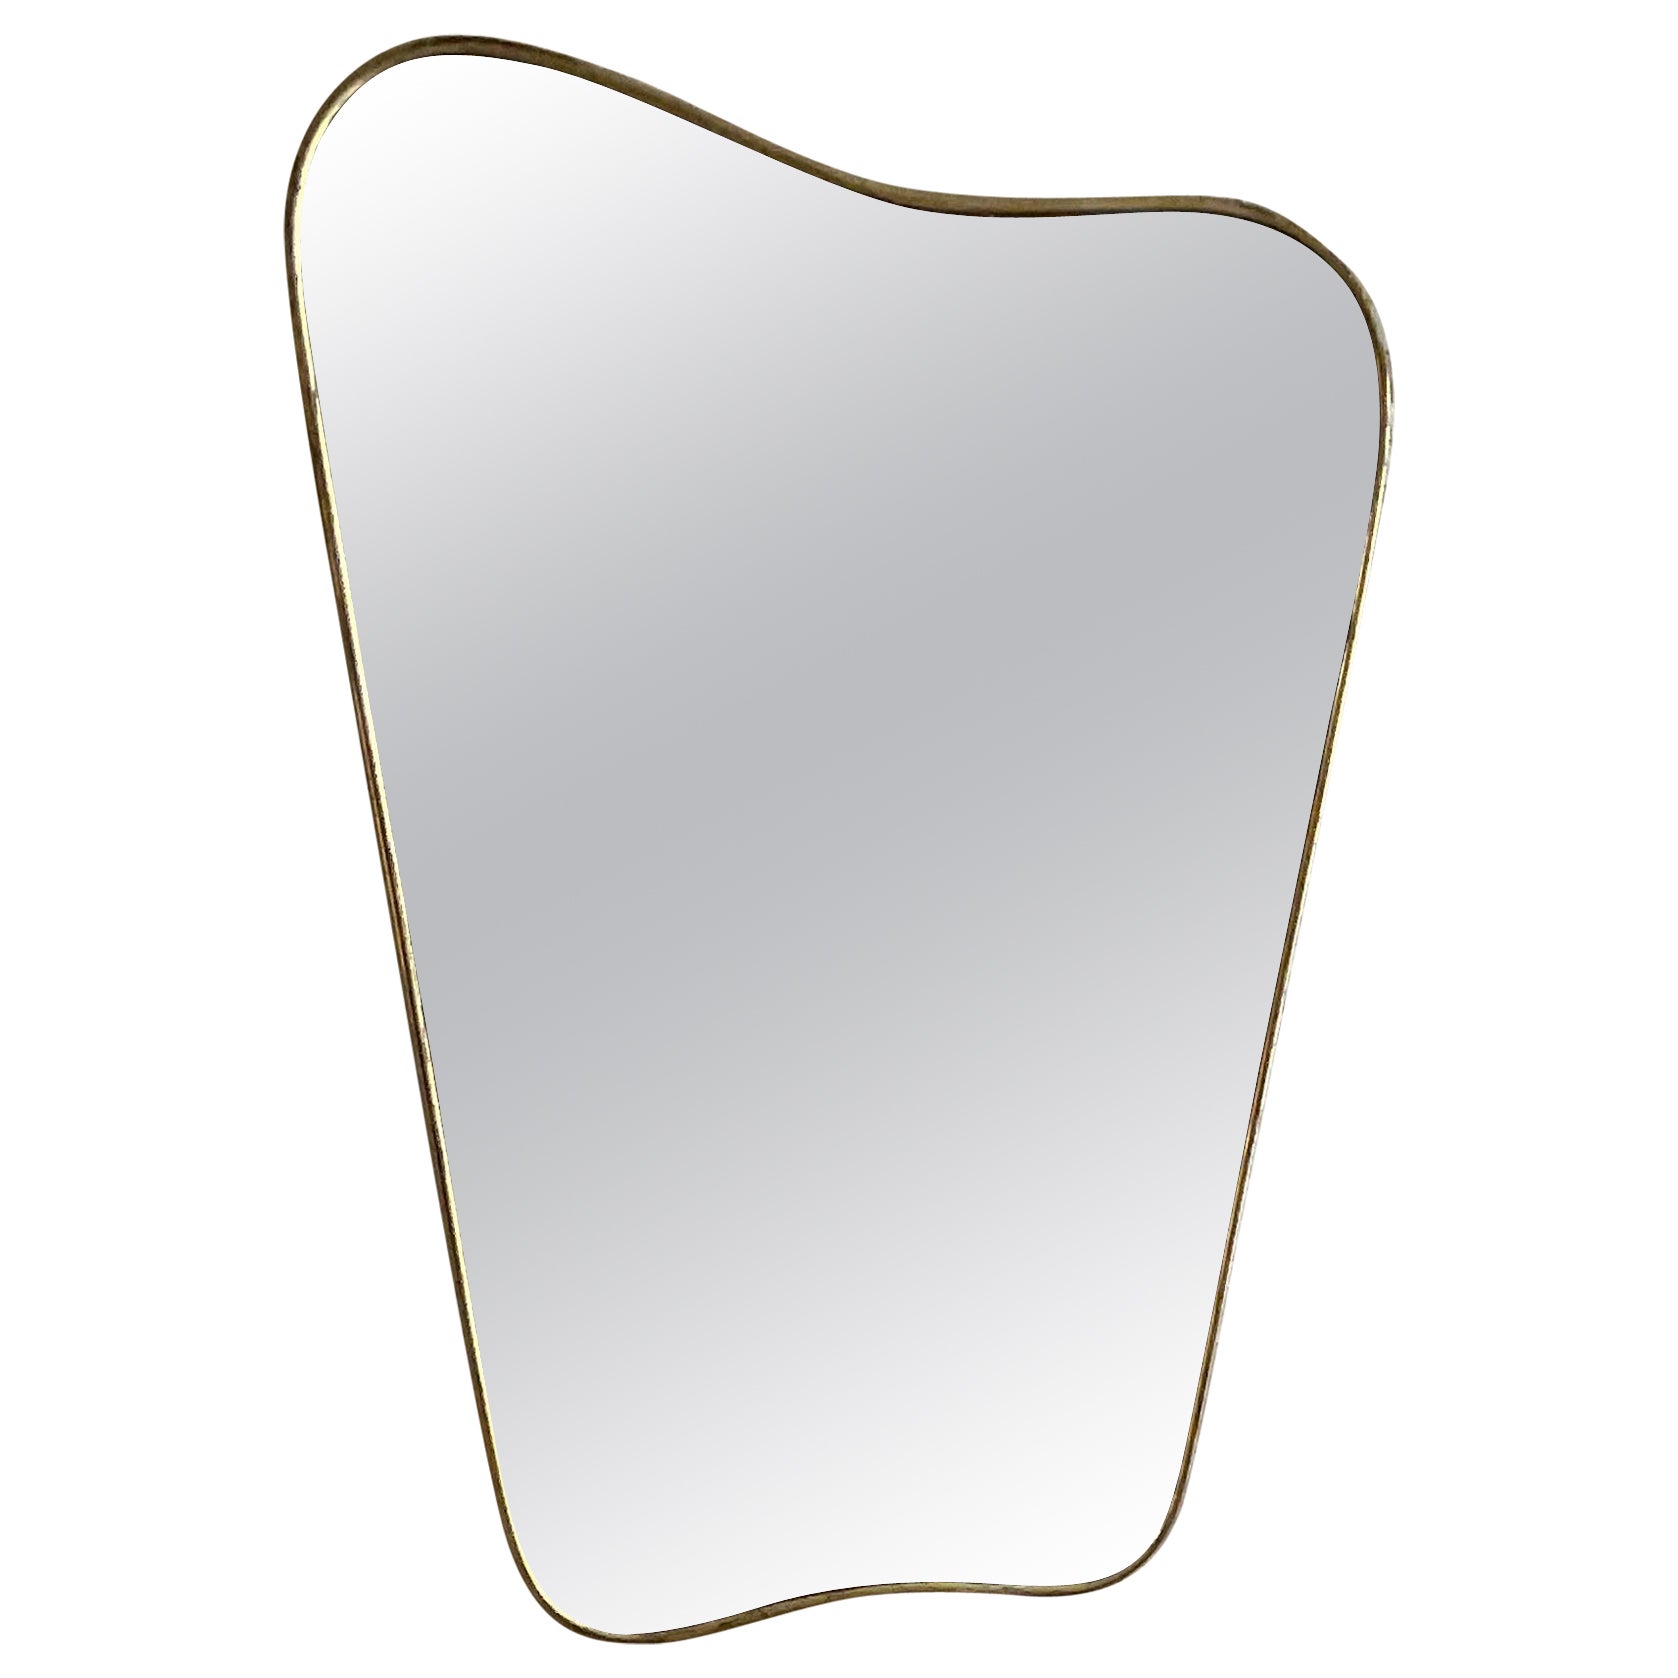 FONTANARTE - Pietro CHIESA - mirror with brass frame - ITALY 1950s For Sale